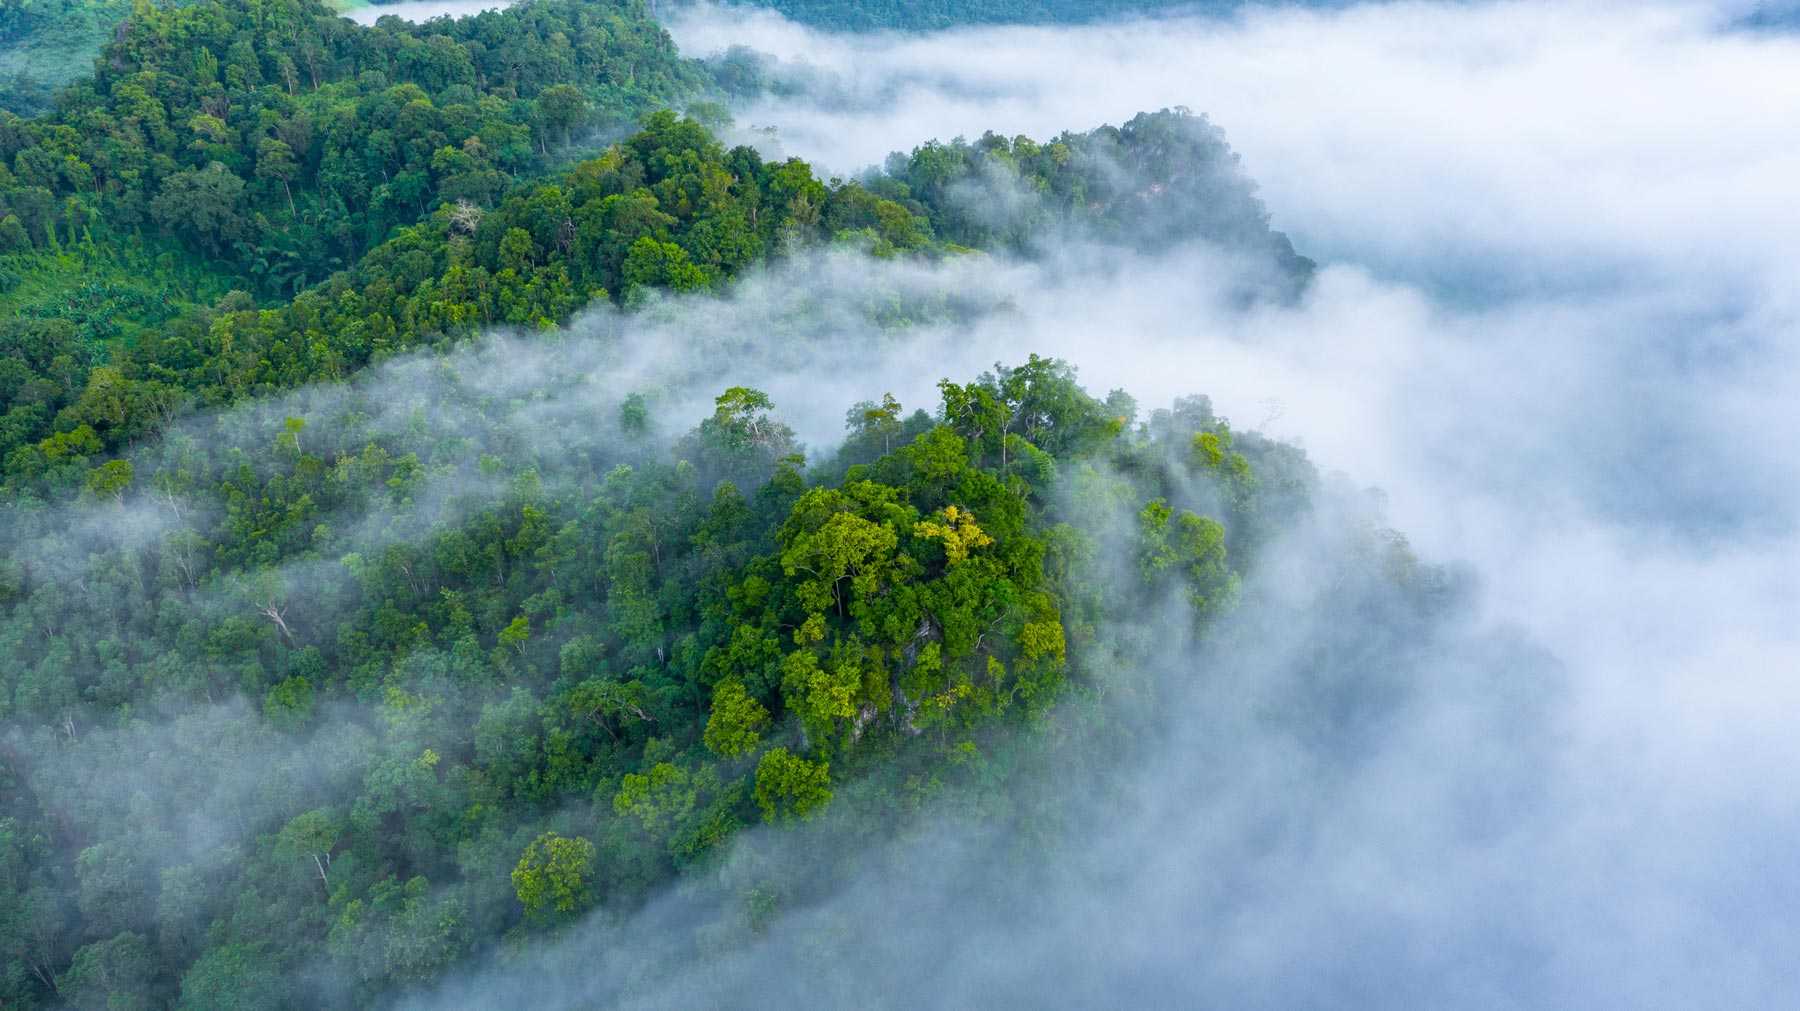 trees with dense fog